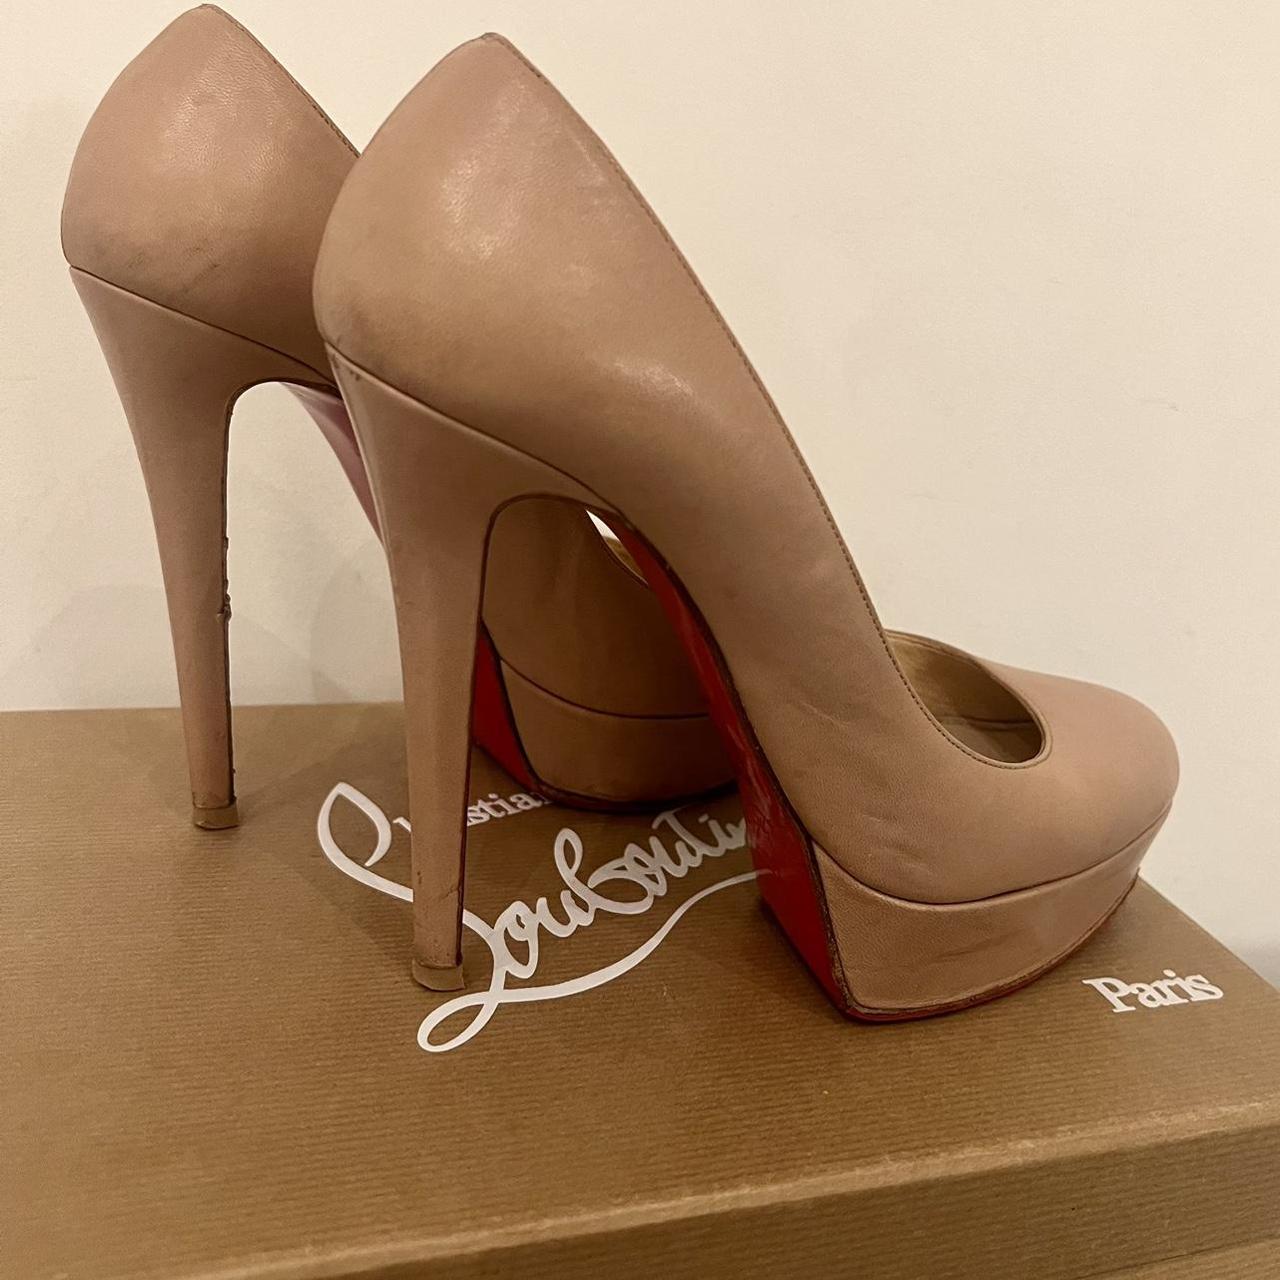 Christian Louboutin Bianca platform heels in a sleek... - Depop